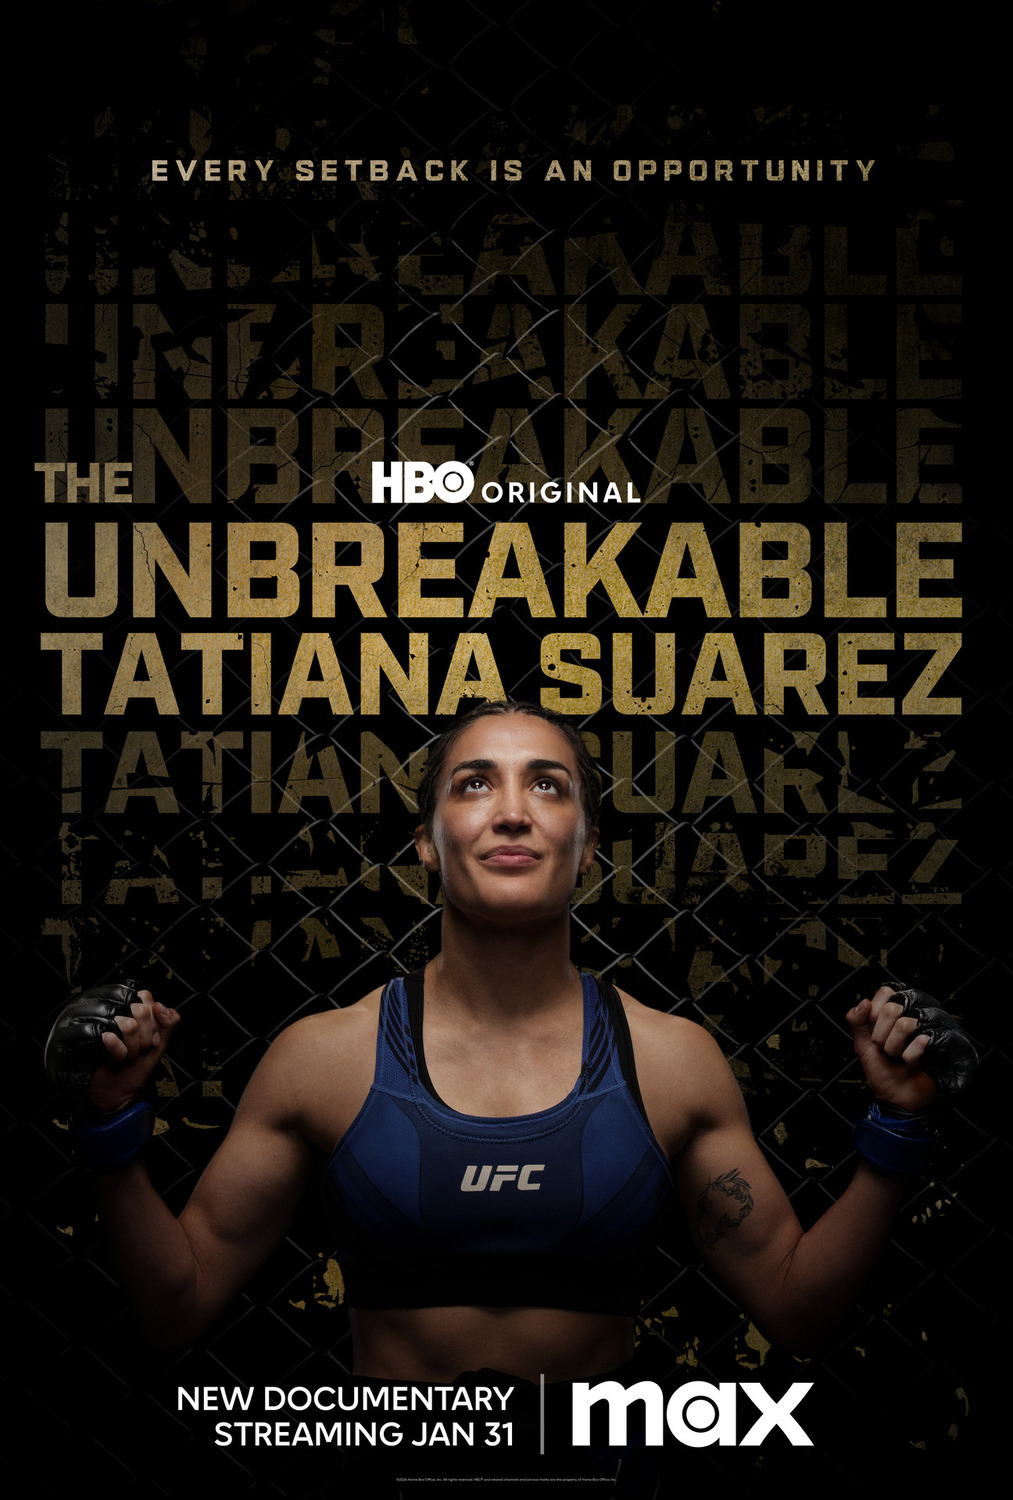 Extra Large Movie Poster Image for The Unbreakable Tatiana Suarez 